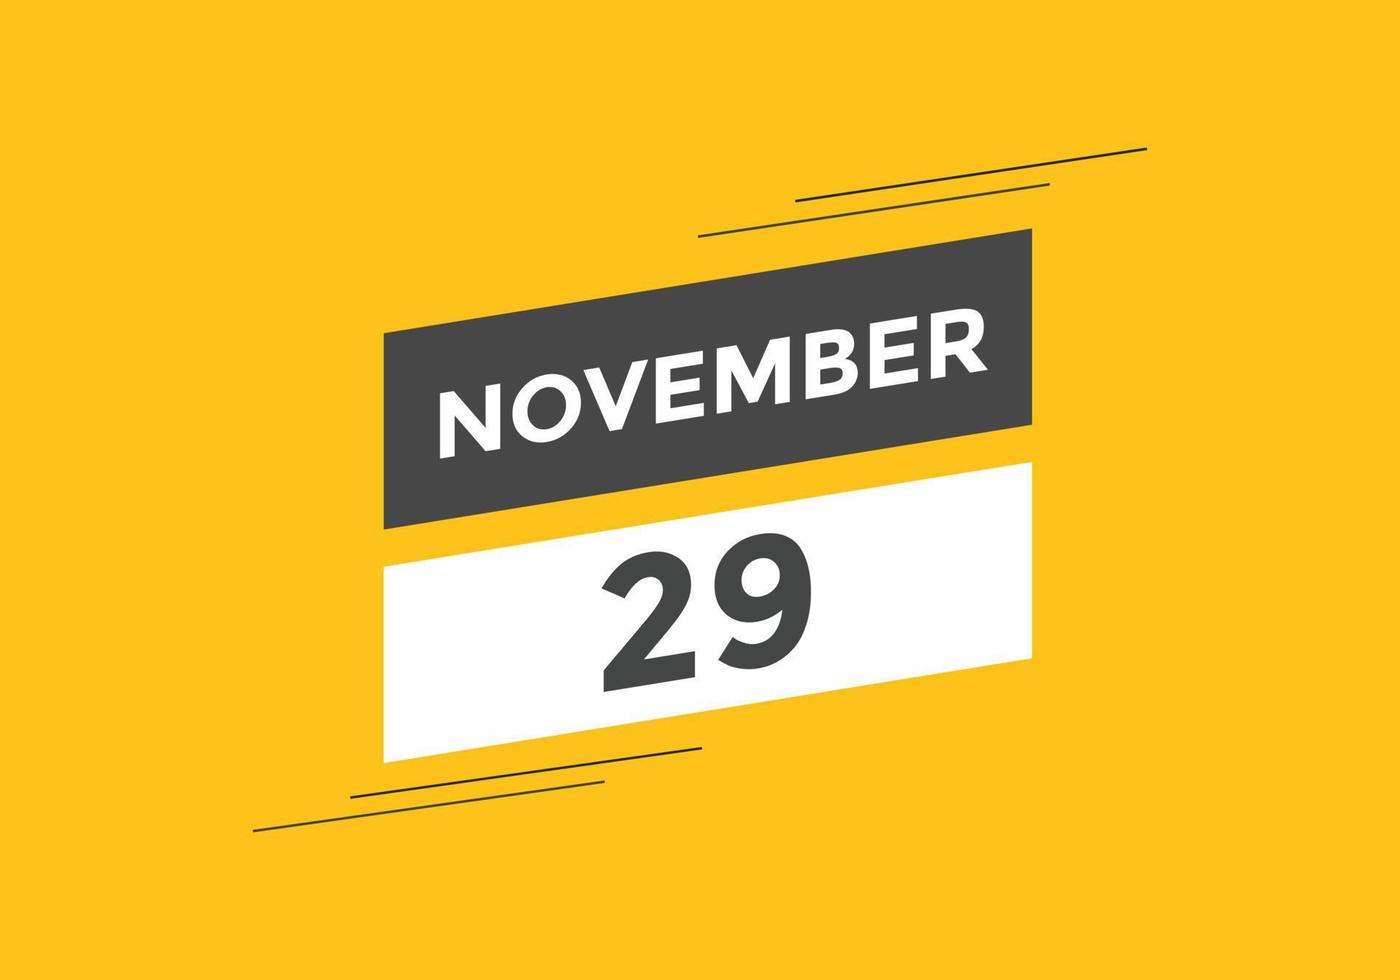 november 29 kalender herinnering. 29e november dagelijks kalender icoon sjabloon. kalender 29e november icoon ontwerp sjabloon. vector illustratie